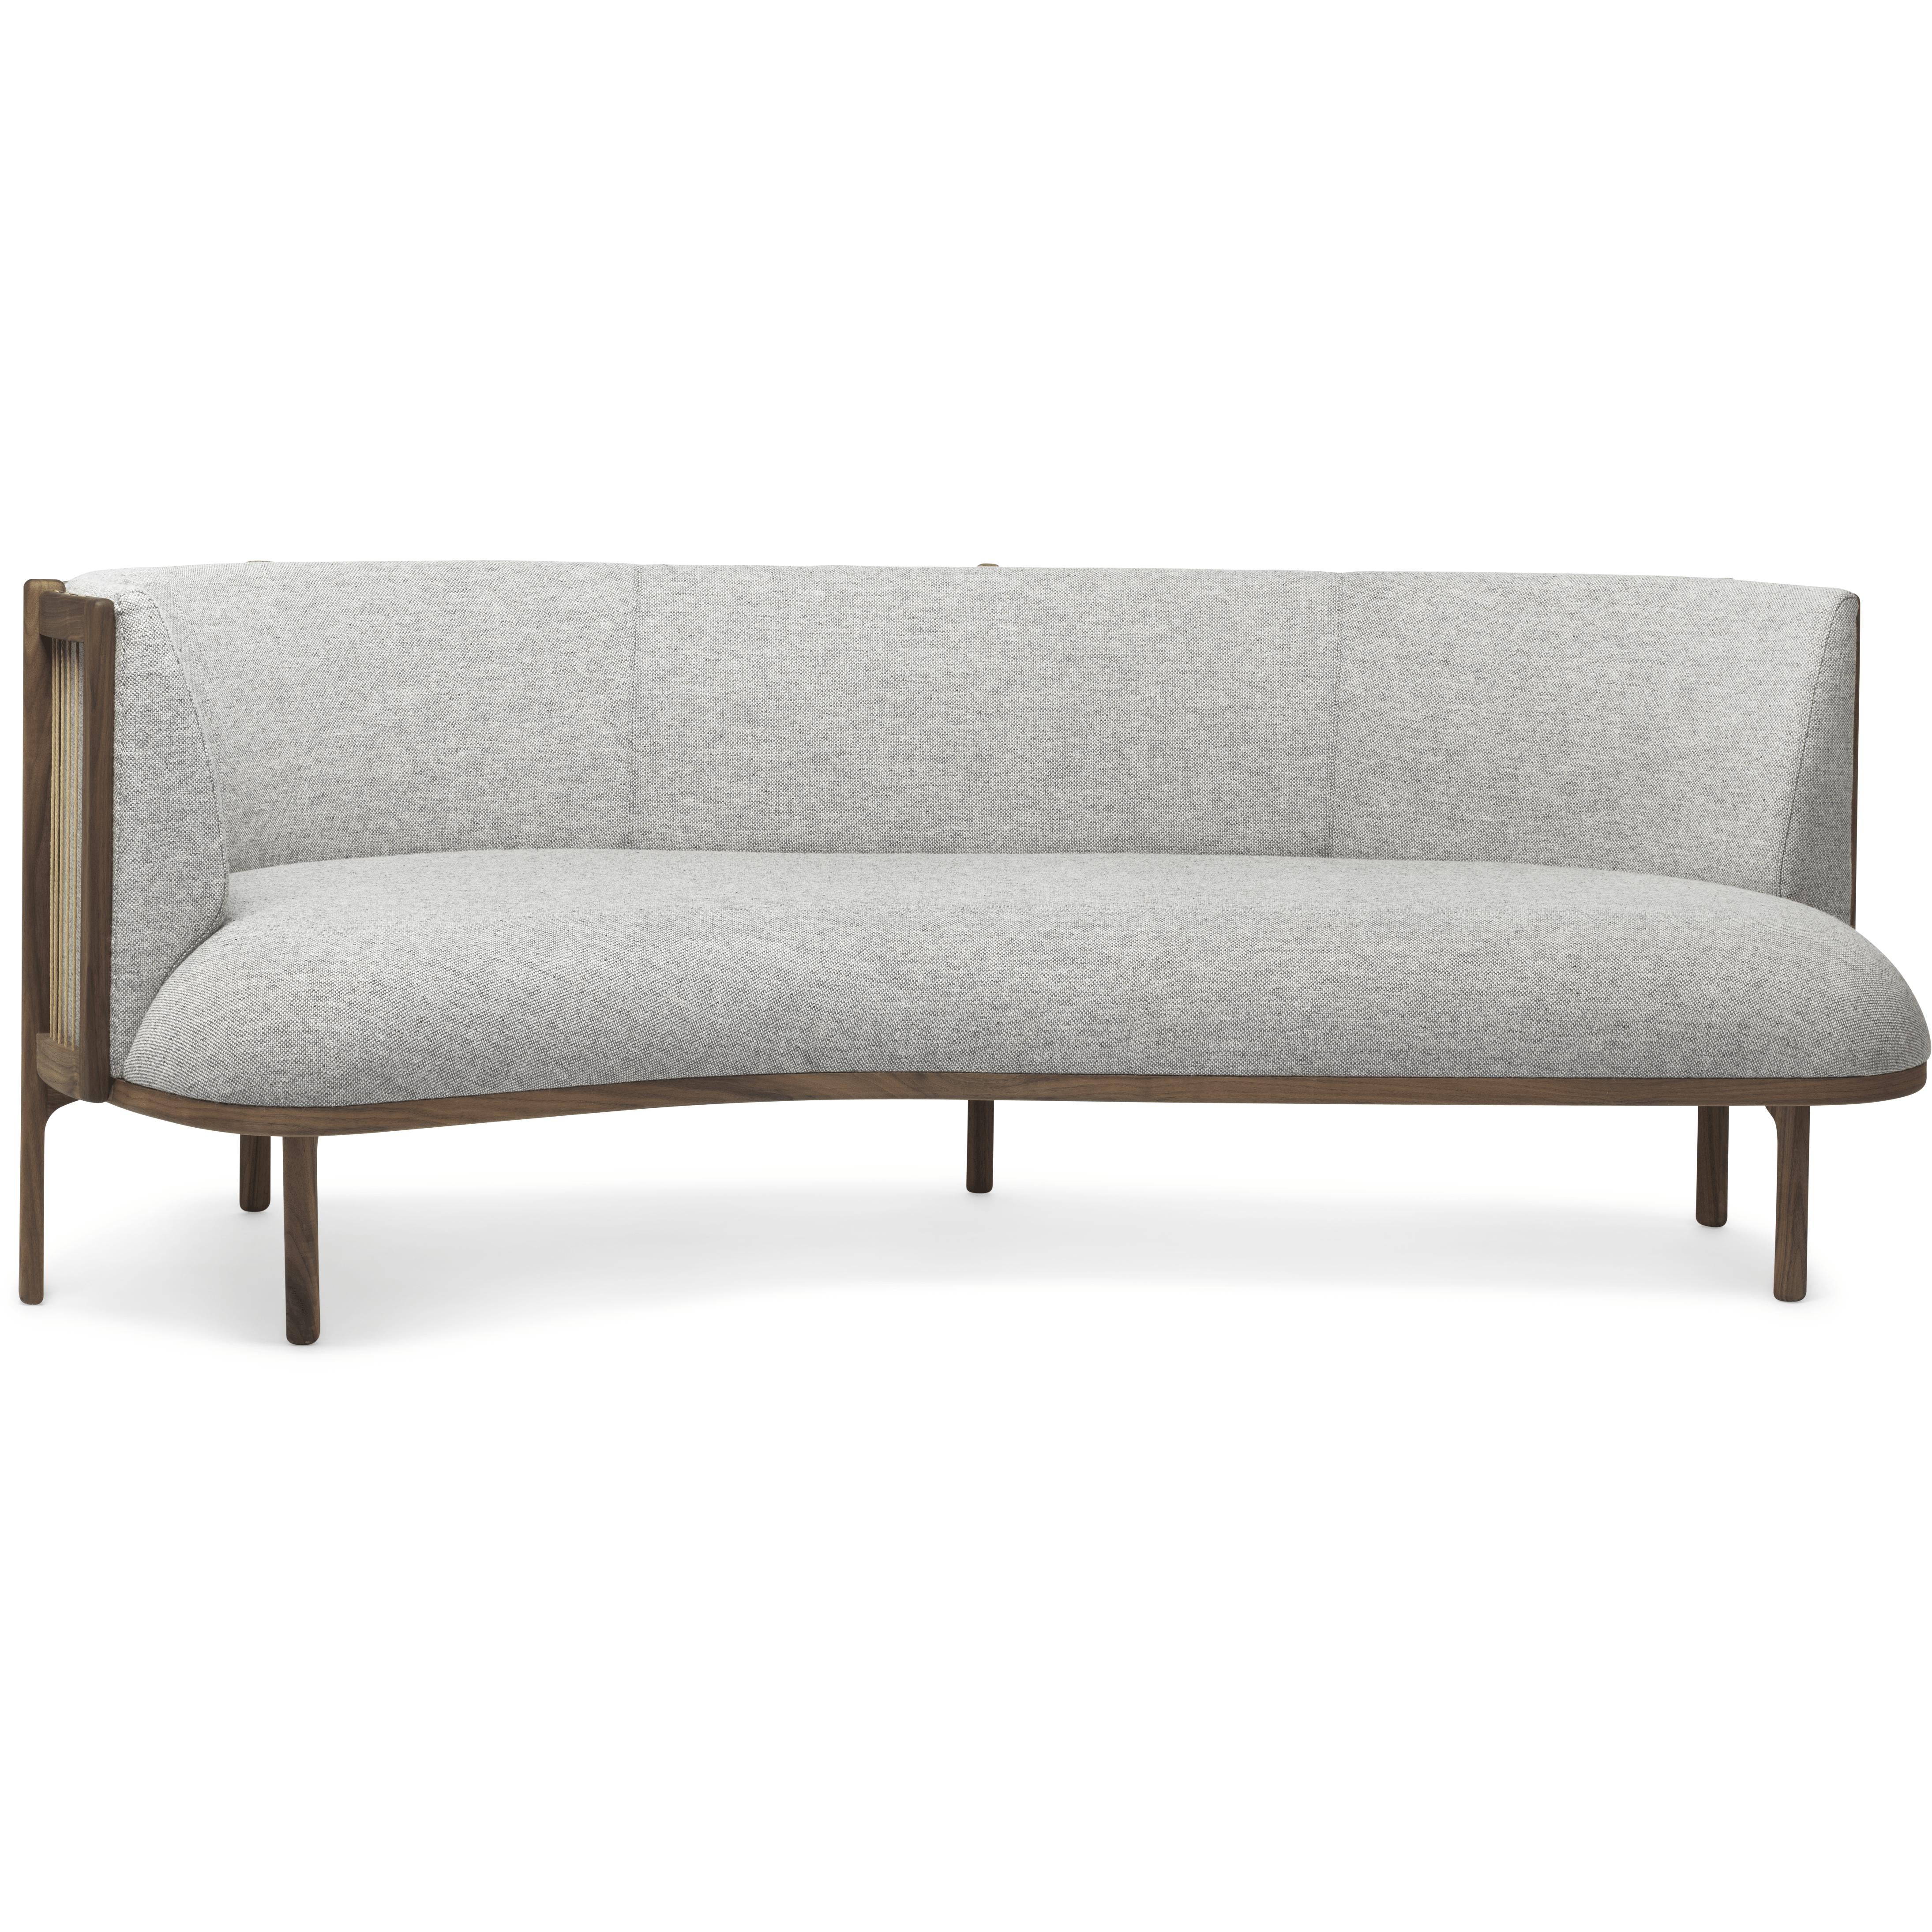 Carl Hansen Rf1903 L Sideways Sofa 3 Seater Left Walnut Oil/Hallingdal 116 Fabic, Grey/Natural Brown